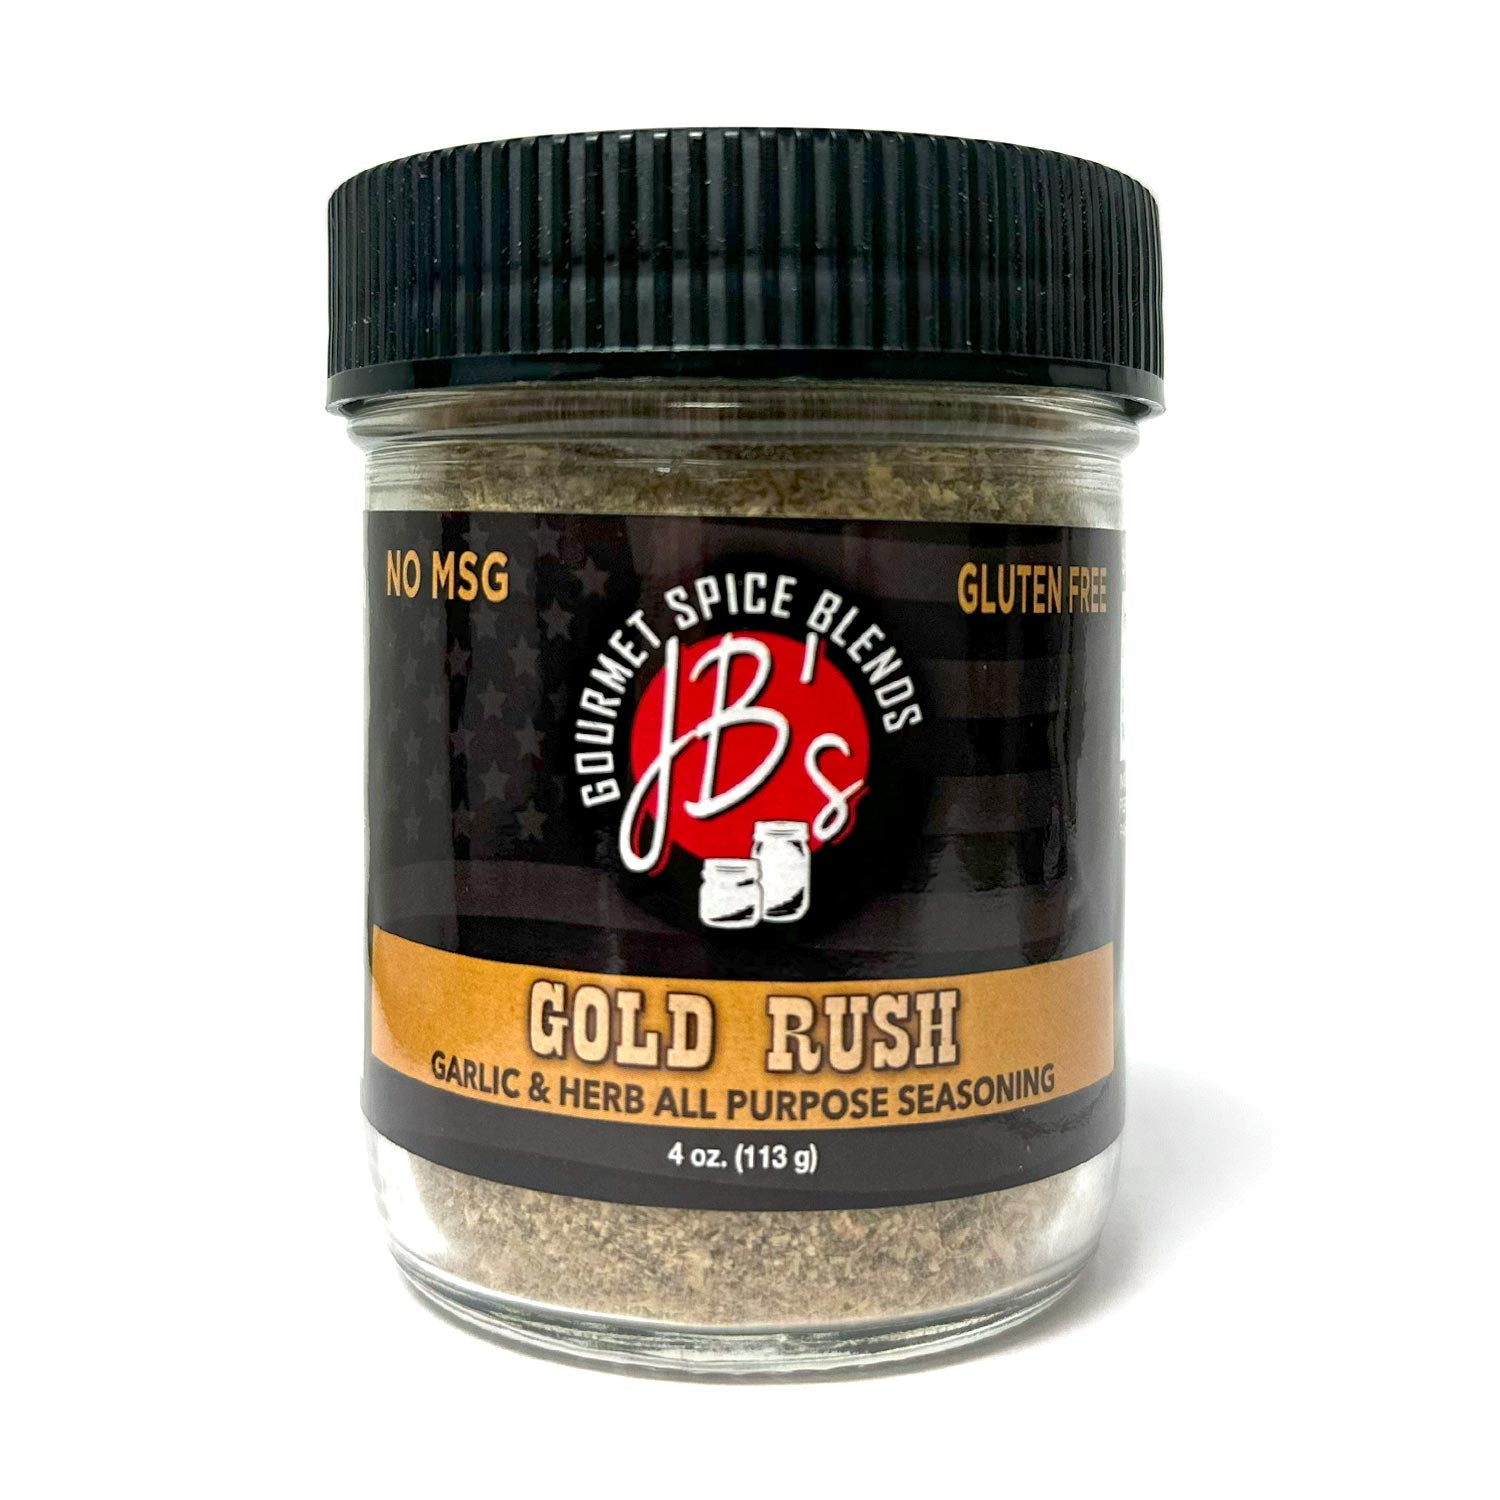 Gold Rush (5oz Jar) JB's Gourmet Spice Blends